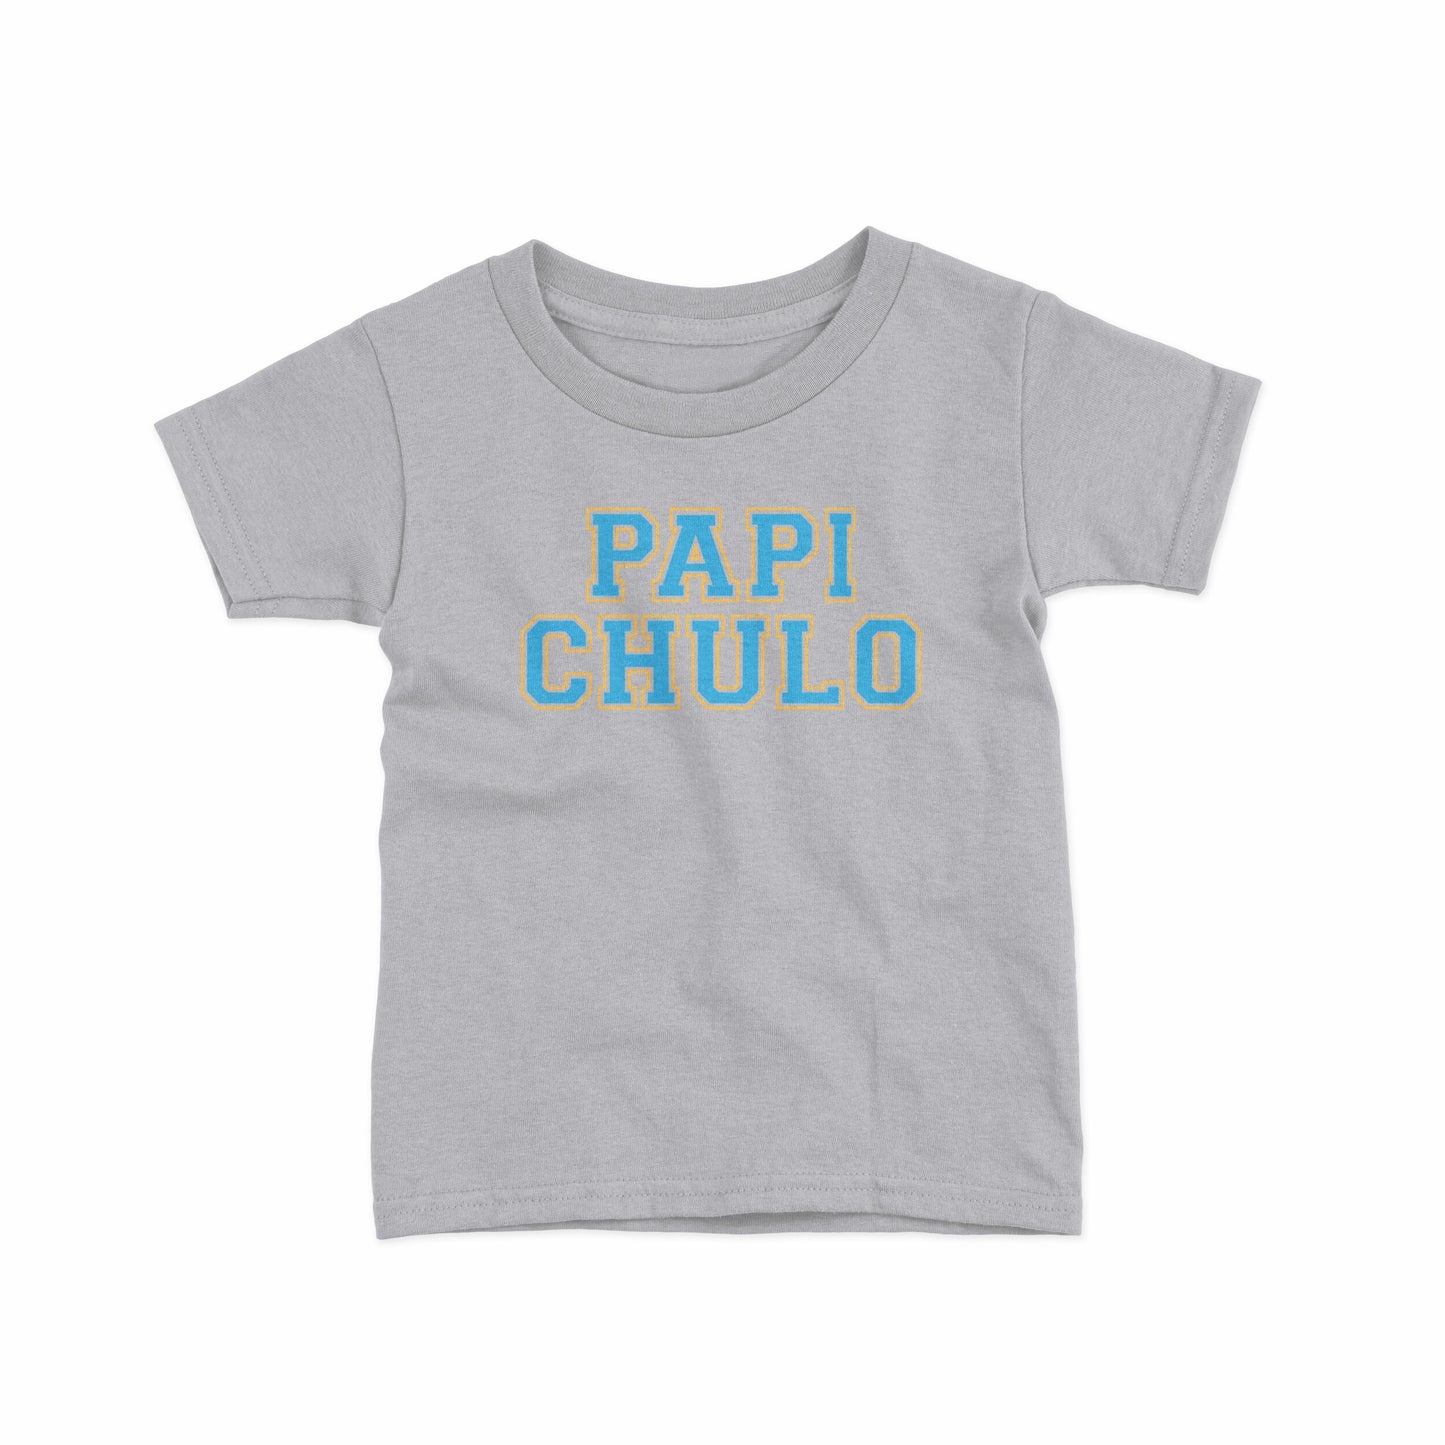 Papi Chulo Toddler T-shirt